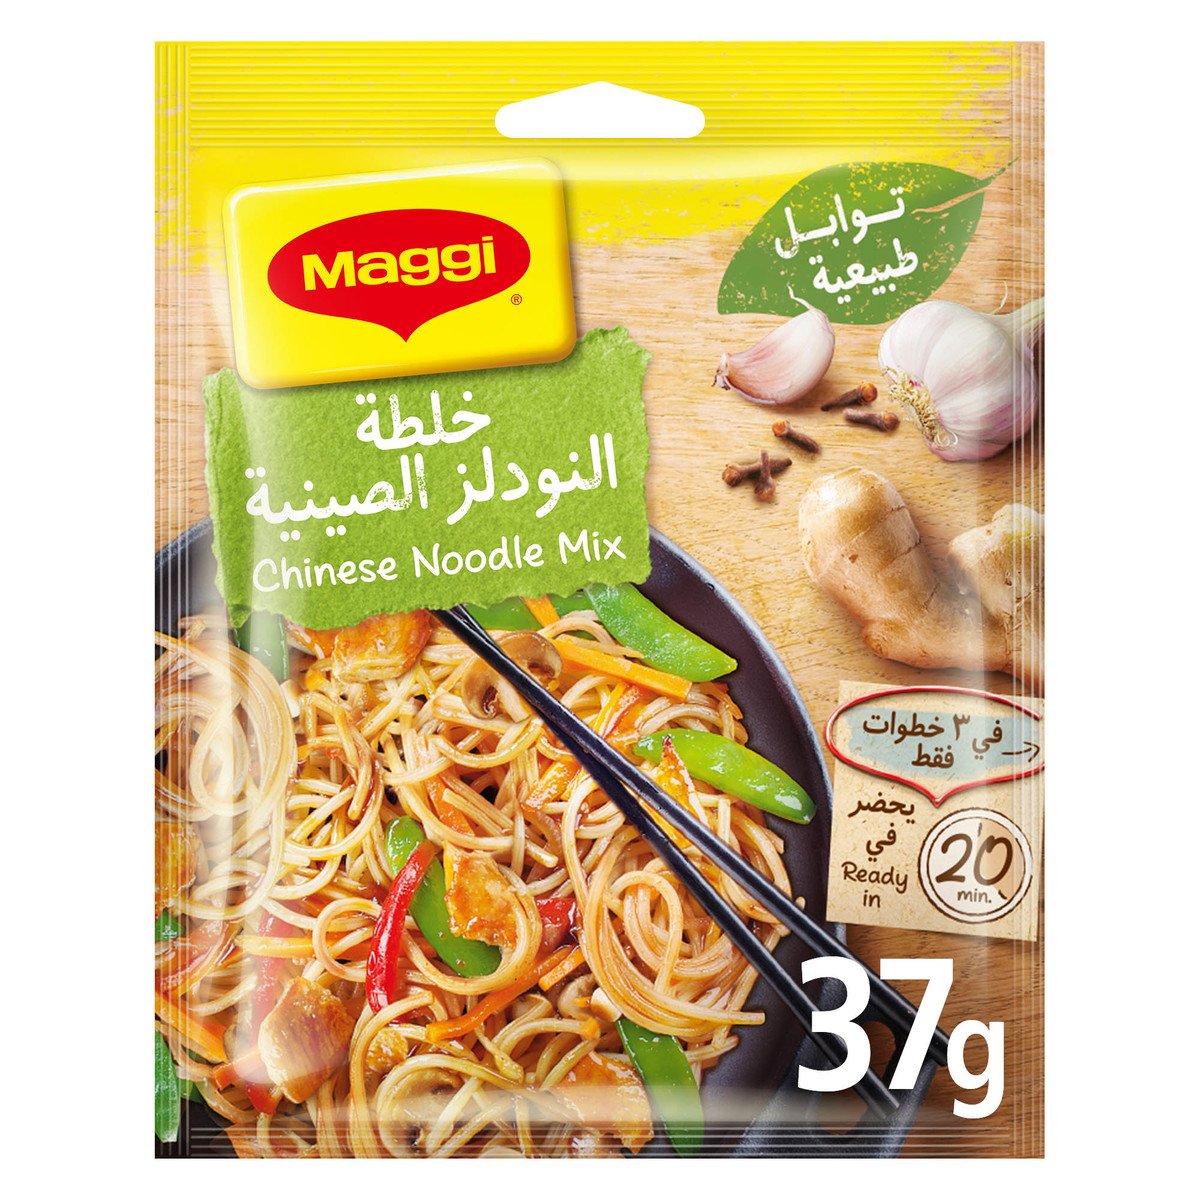 Maggi Chinese Noodle Mix 5 x 37 g